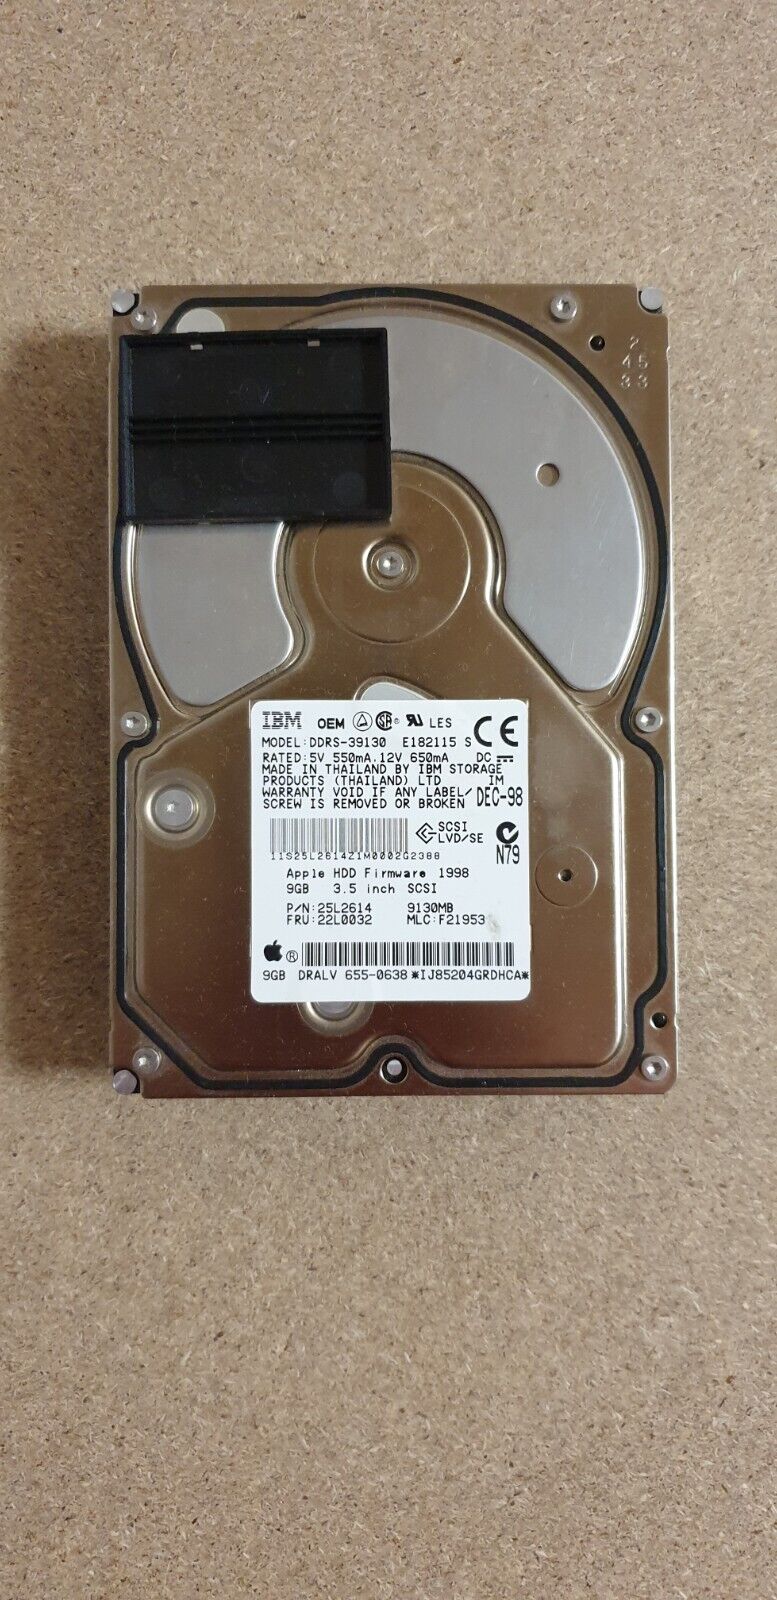 Hard drive IBM APPLE MODEL: DDRS-39130 5V 550mA. 12V 650mA. 9G 3.5inch SCSI. Mad